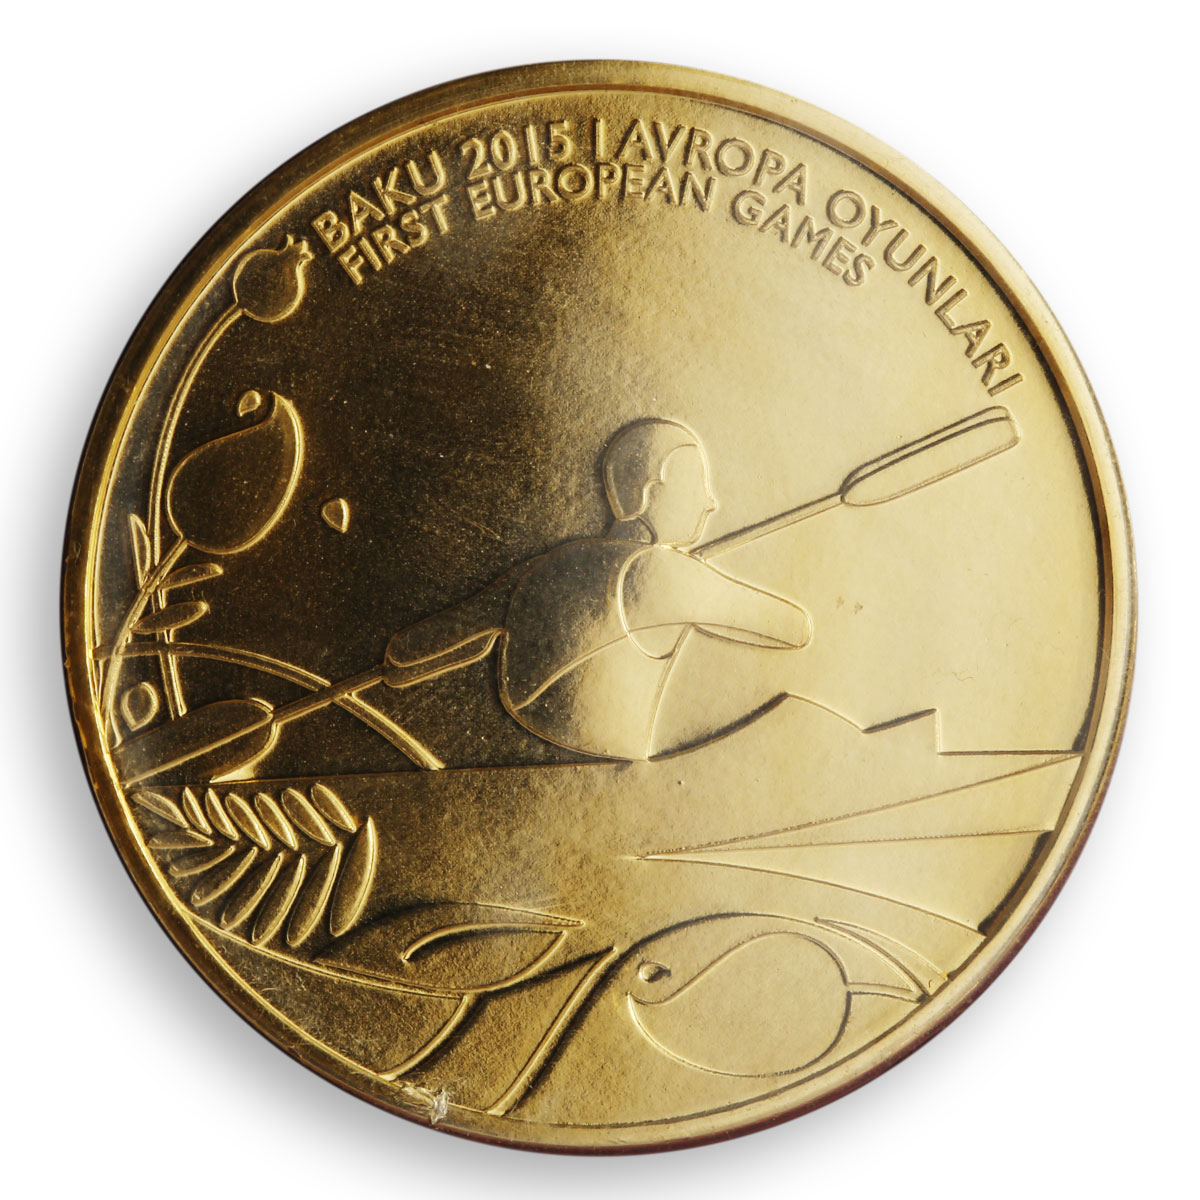 Azerbaijan 1 manat Canoe Sprint European Games in Baku copper-nickel coin 2015